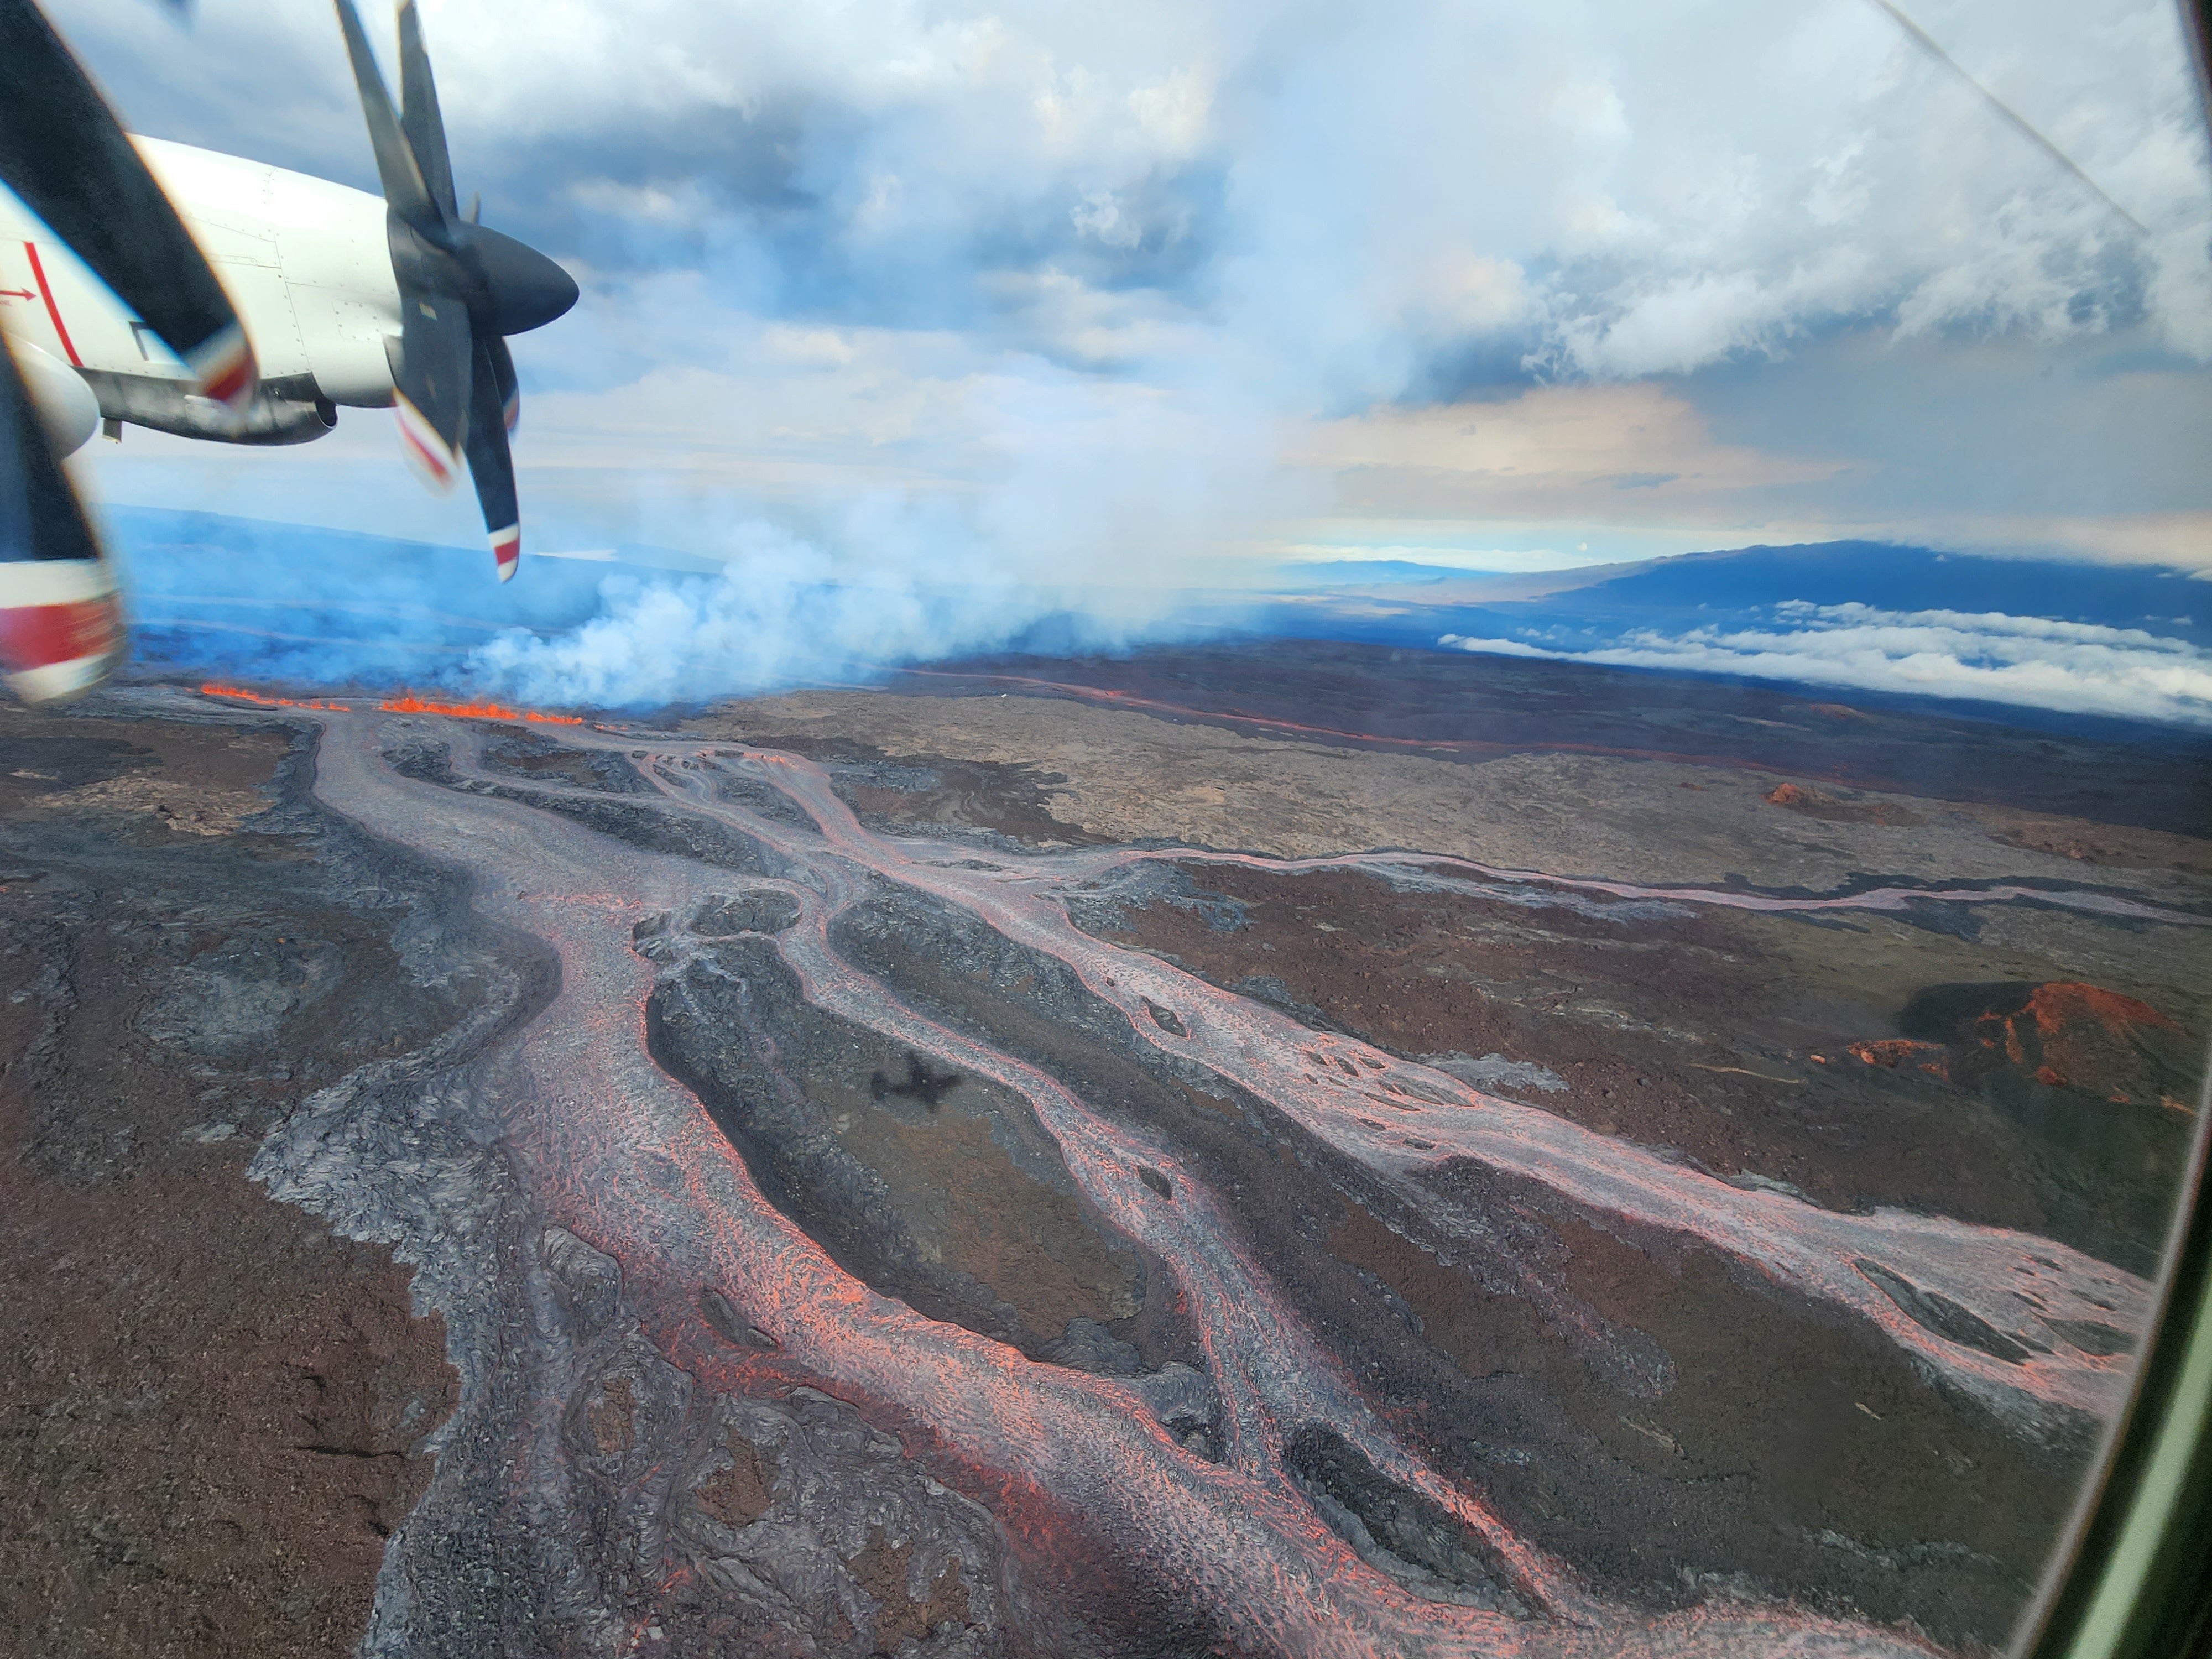 Photos Show Eruption at Mauna Loa, World’s Largest Volcano